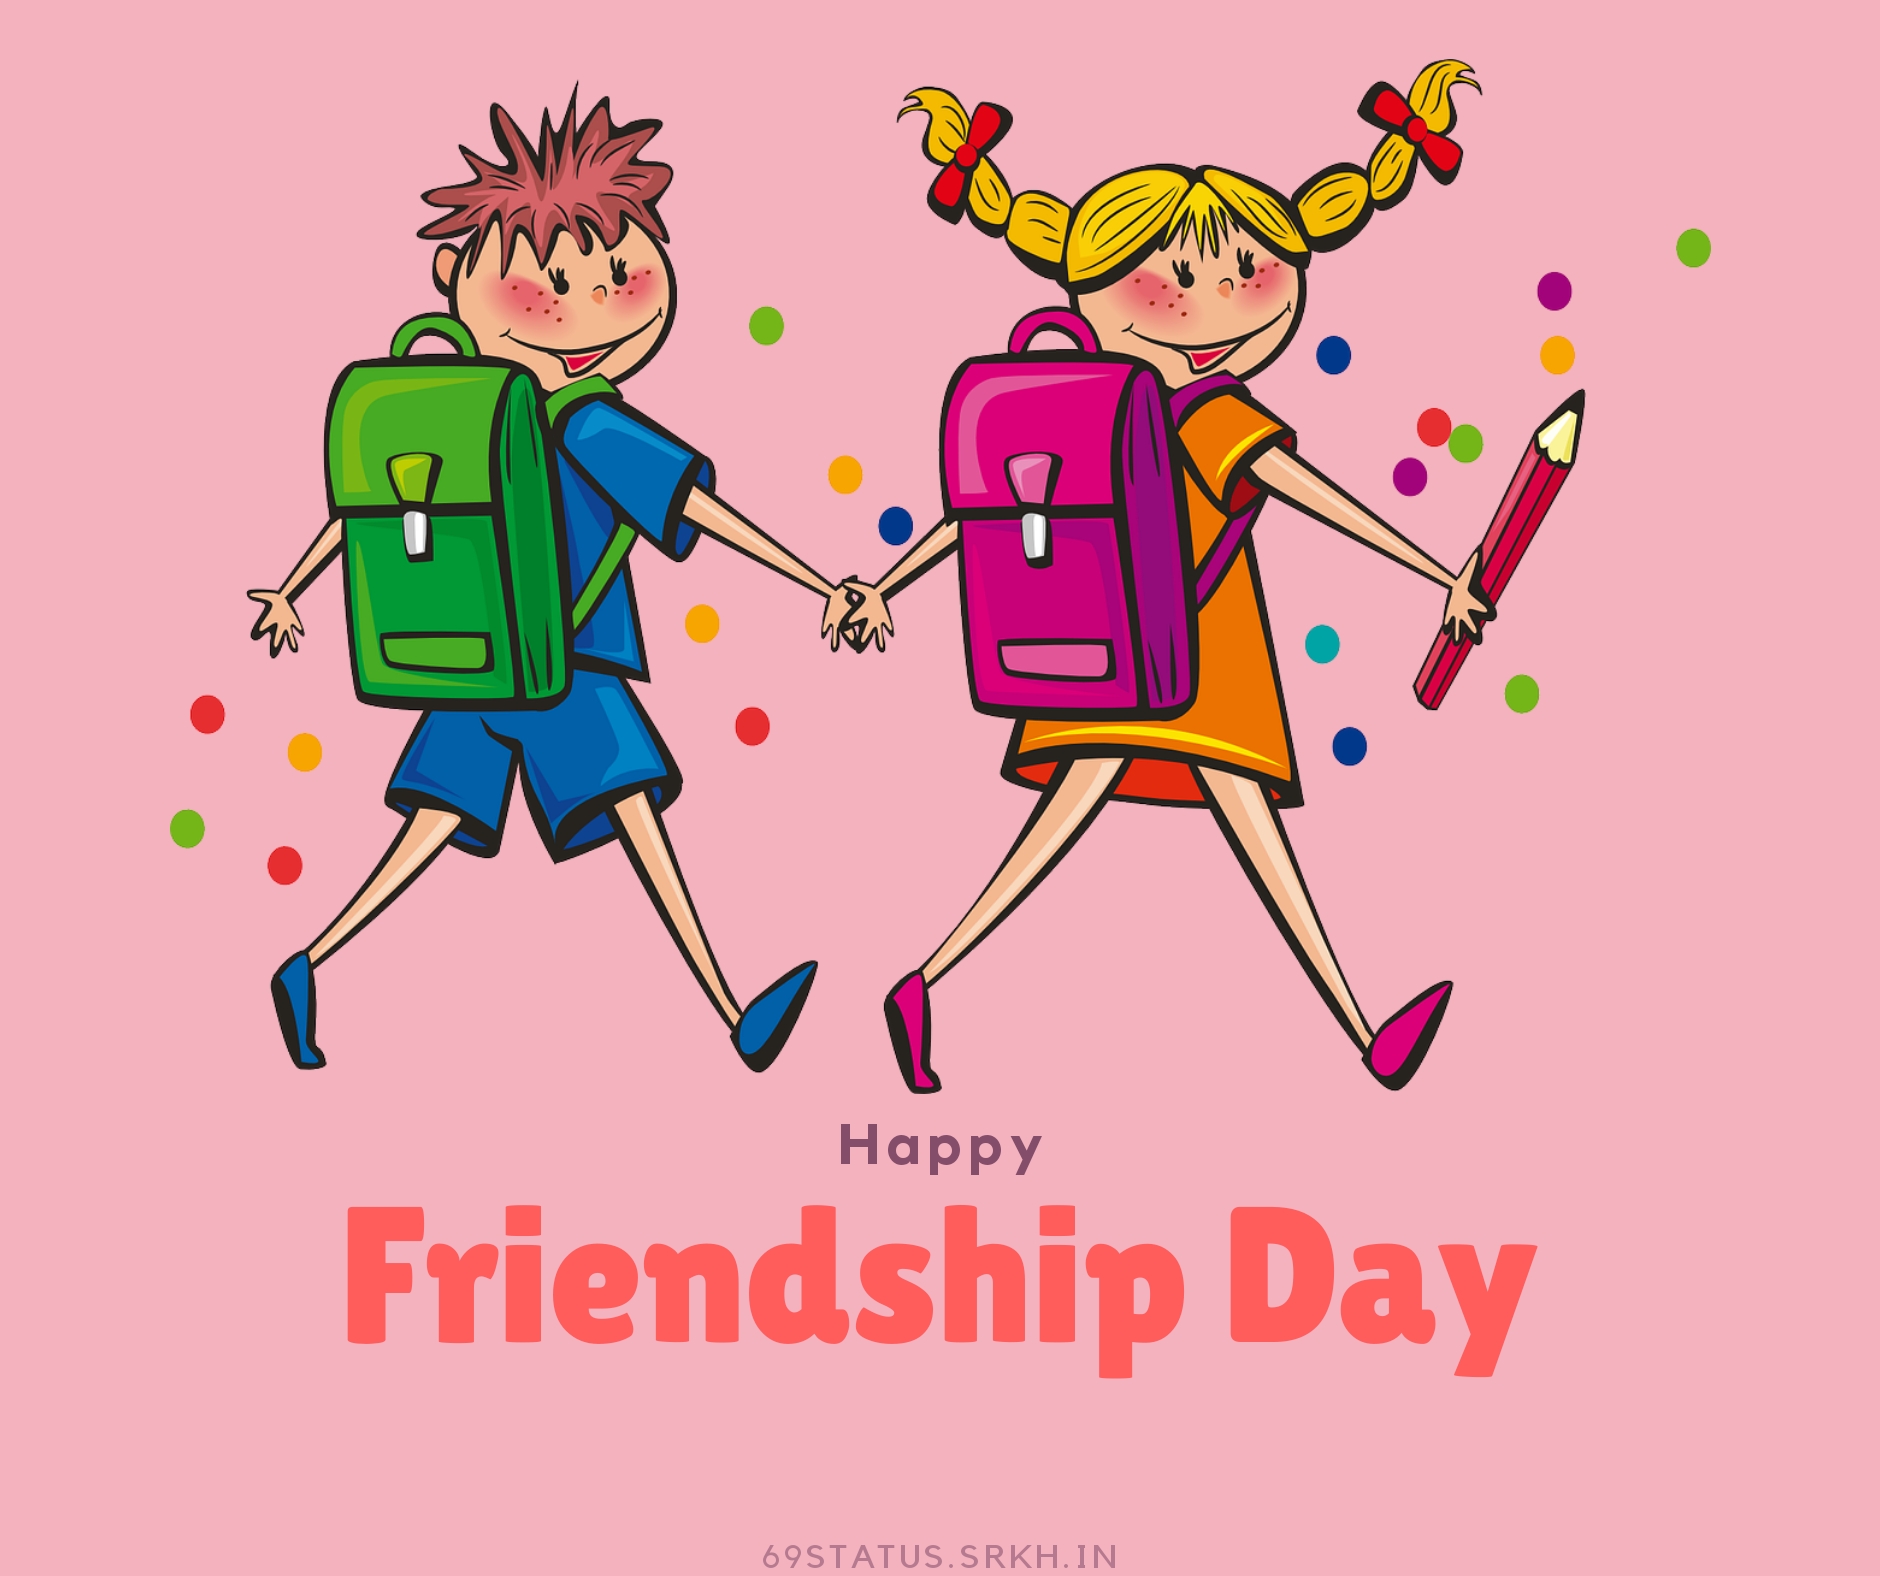 🔥 Happy Friendship Day Images HD Together Download free - Images SRkh